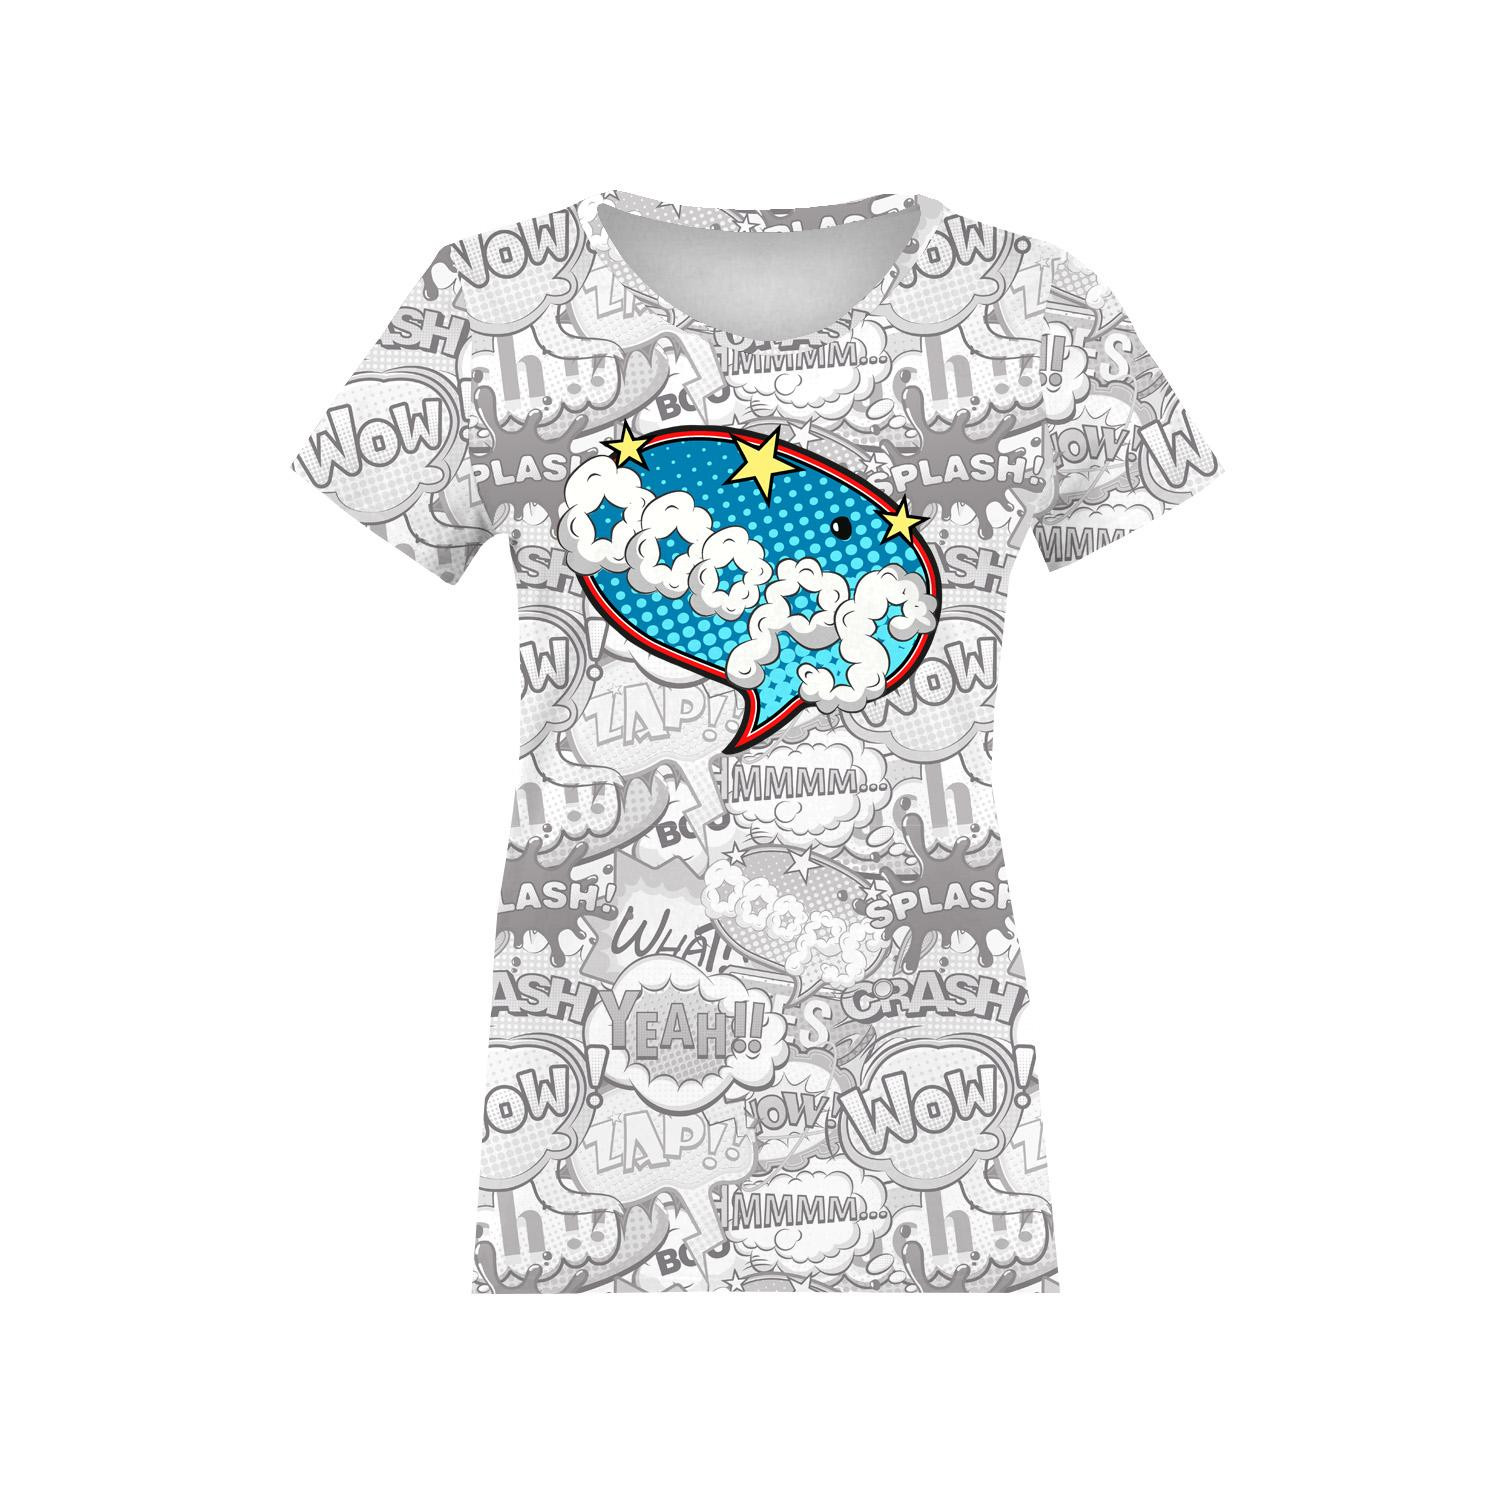 WOMEN’S T-SHIRT - COMIC BOOK / ooops - single jersey